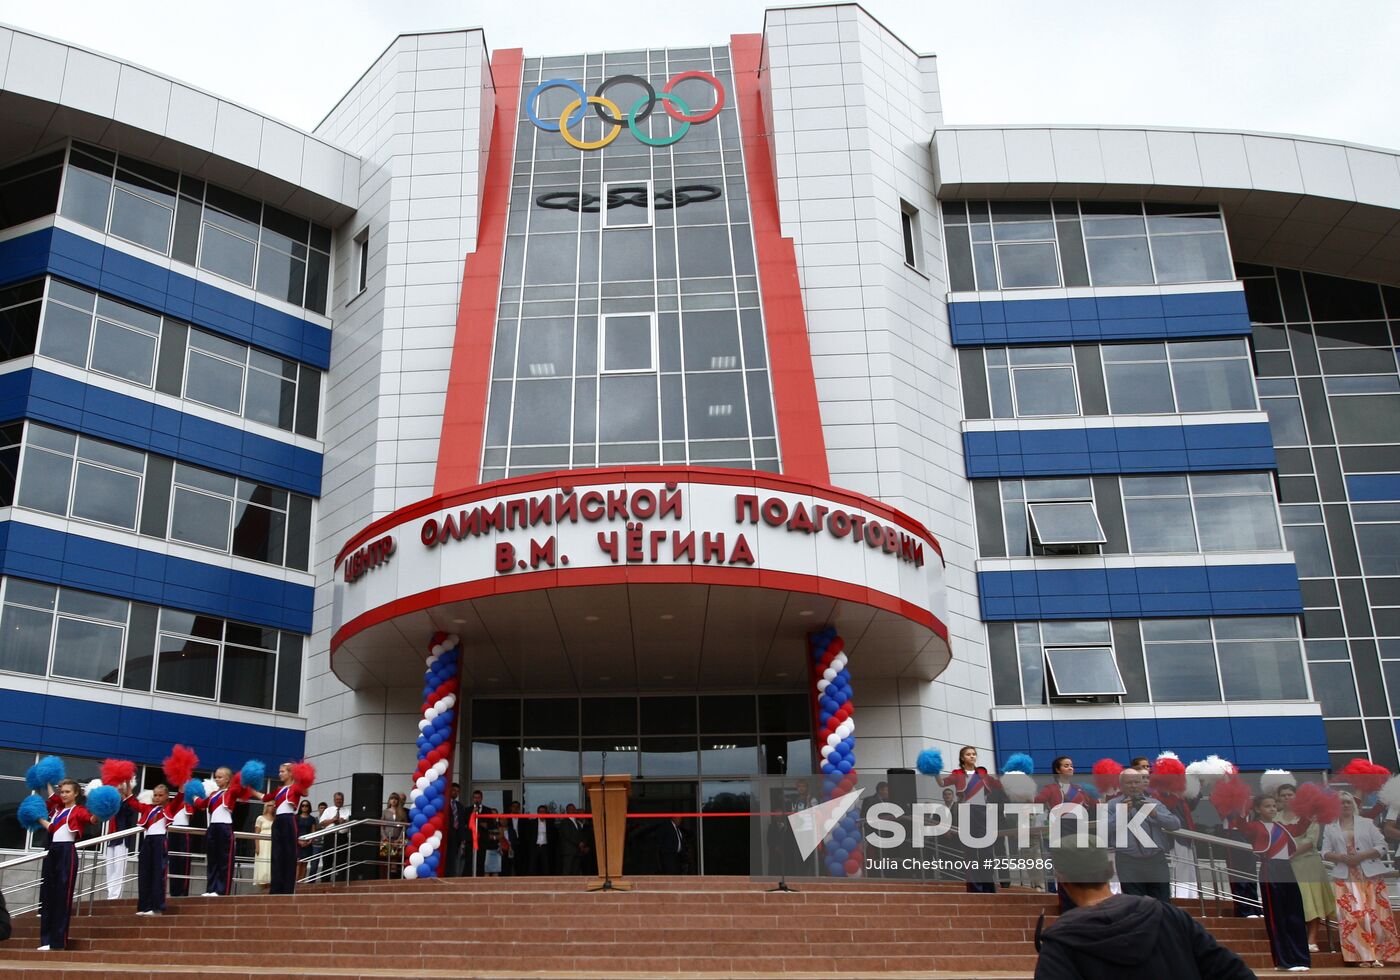 Chegin Olympic Training Center unveiled in Saransk